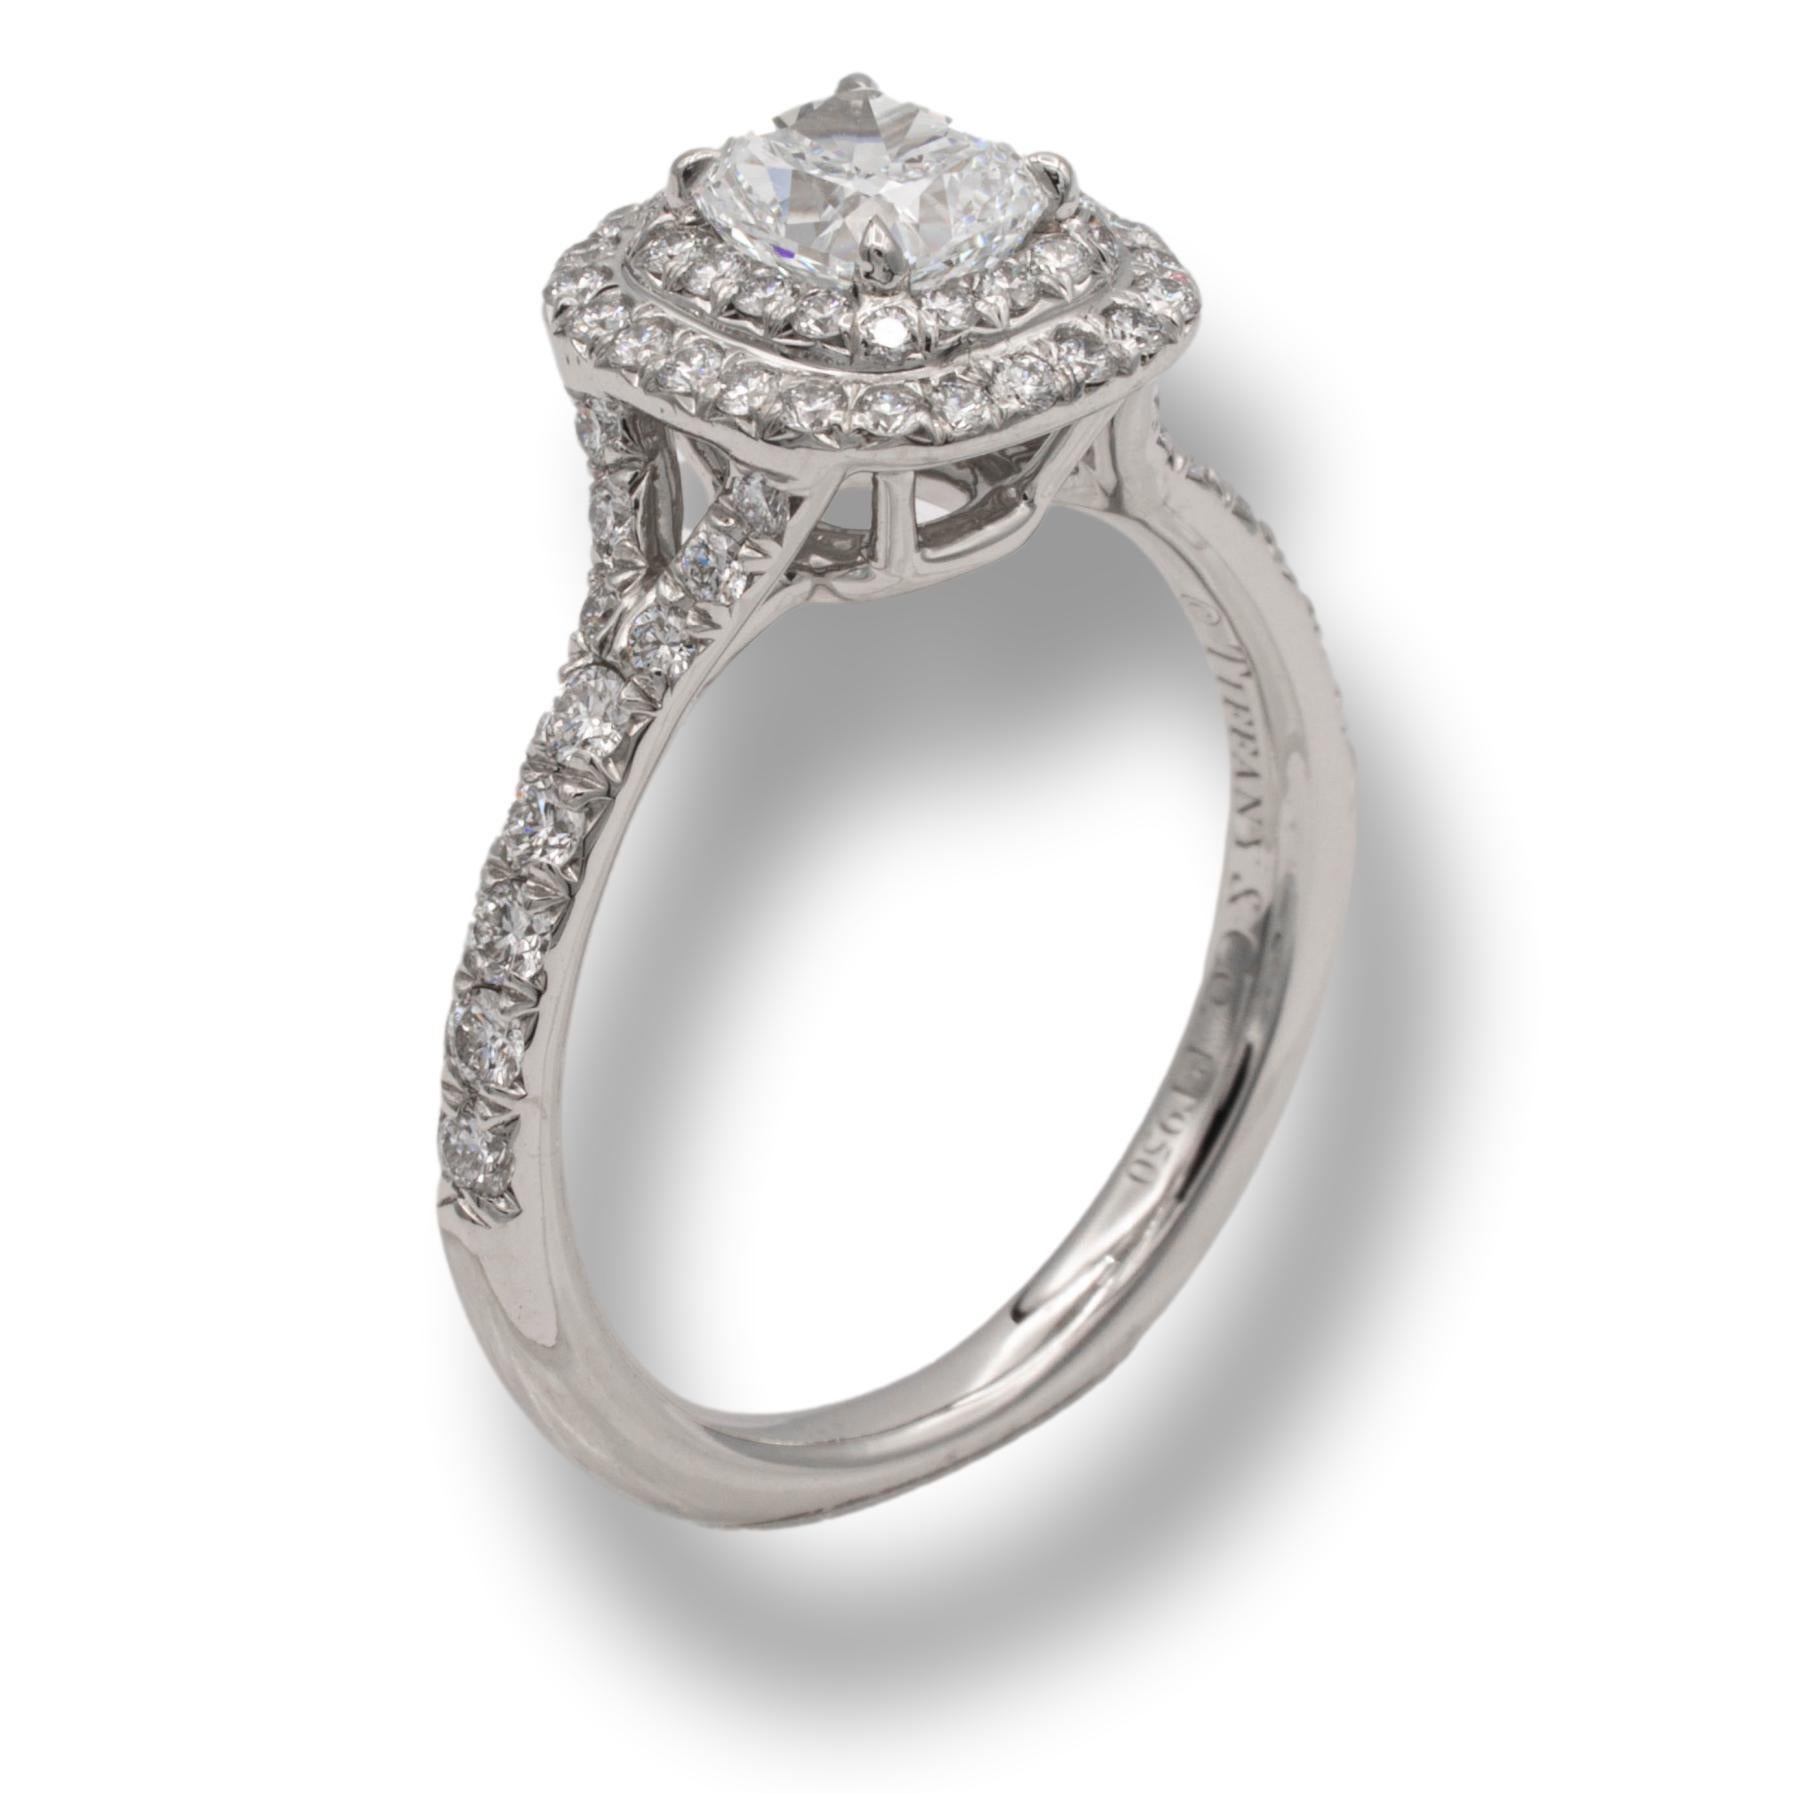 Women's Tiffany & Co. Double Soleste Platinum Diamond Engagement Ring 0.86 Carats Total